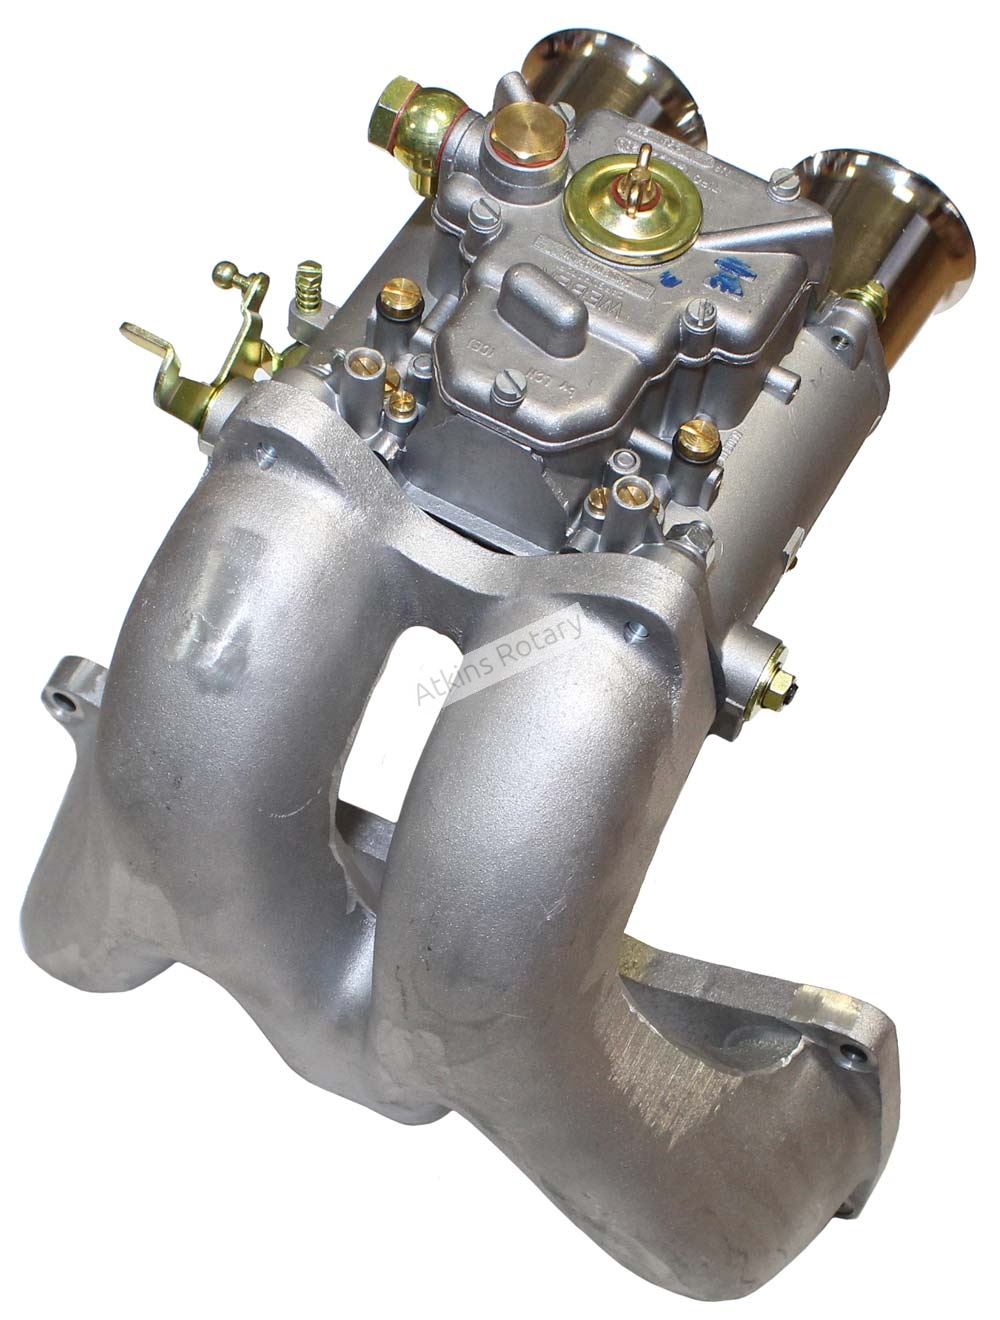 86-91 Rx7 Wrap Over Intake Manifold & Weber 48 DCOE Carburetor Kit (ARE705K48)